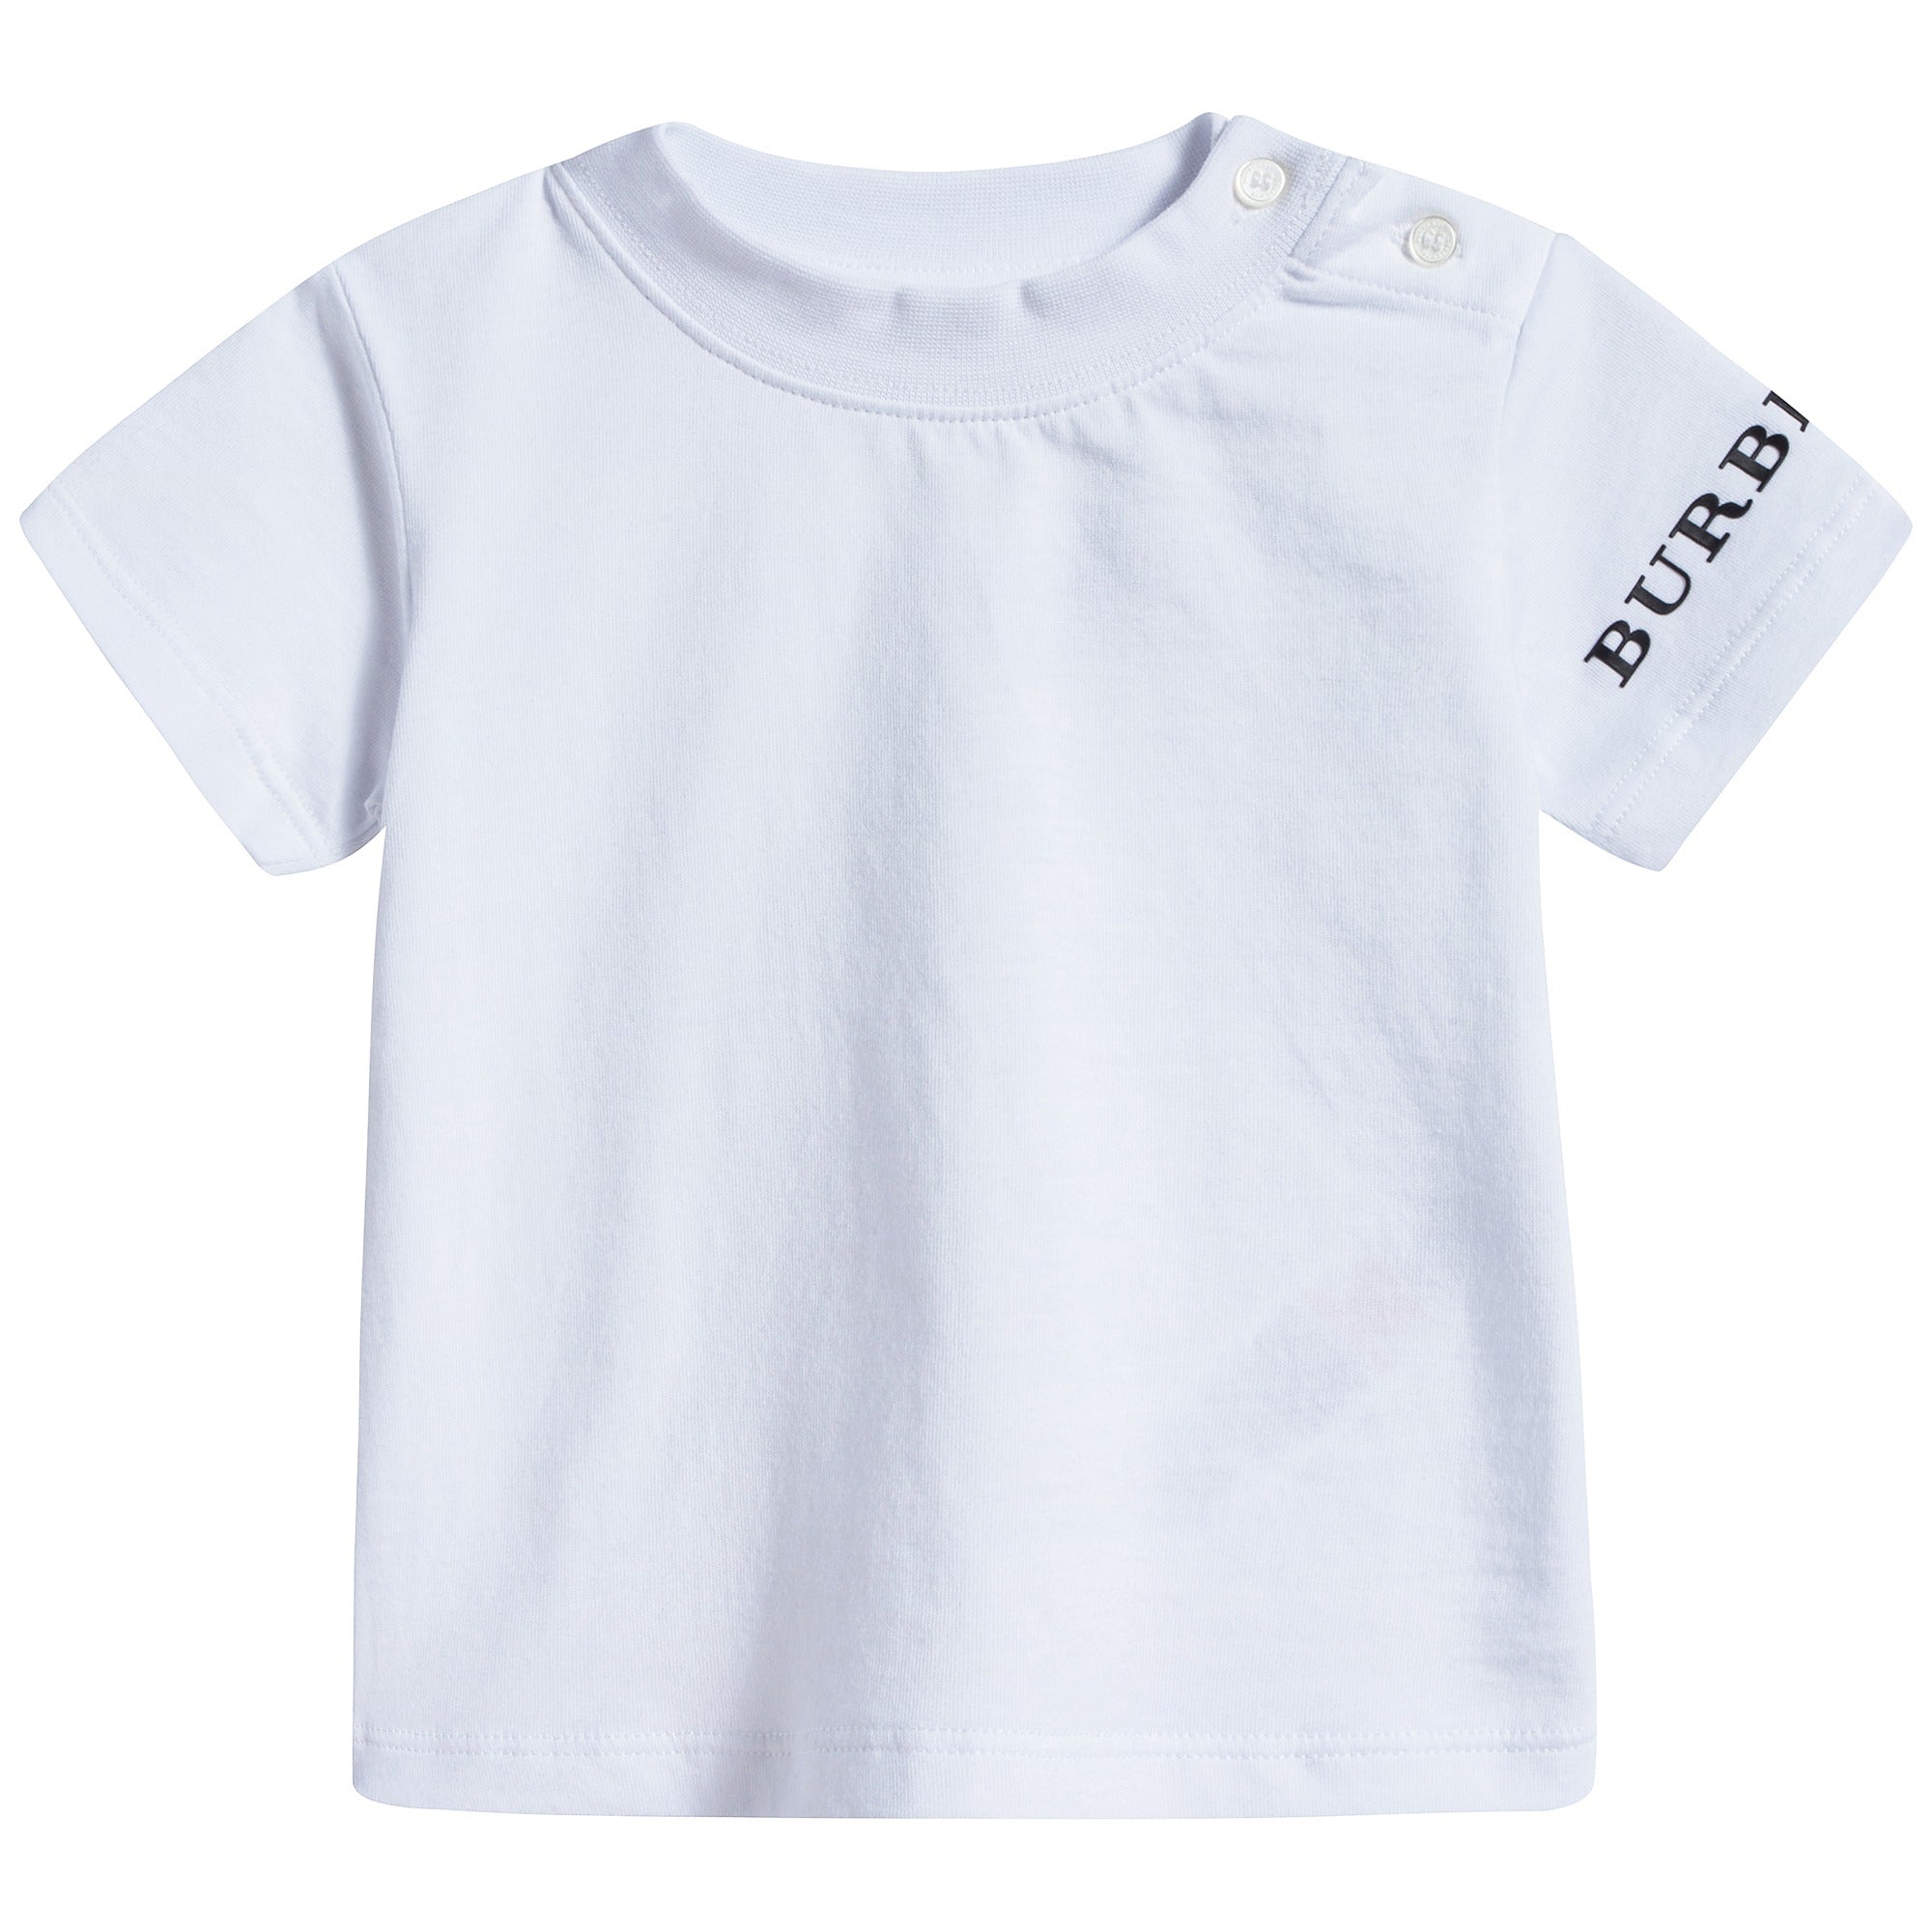 Baby Boys White Cotton T-shirt